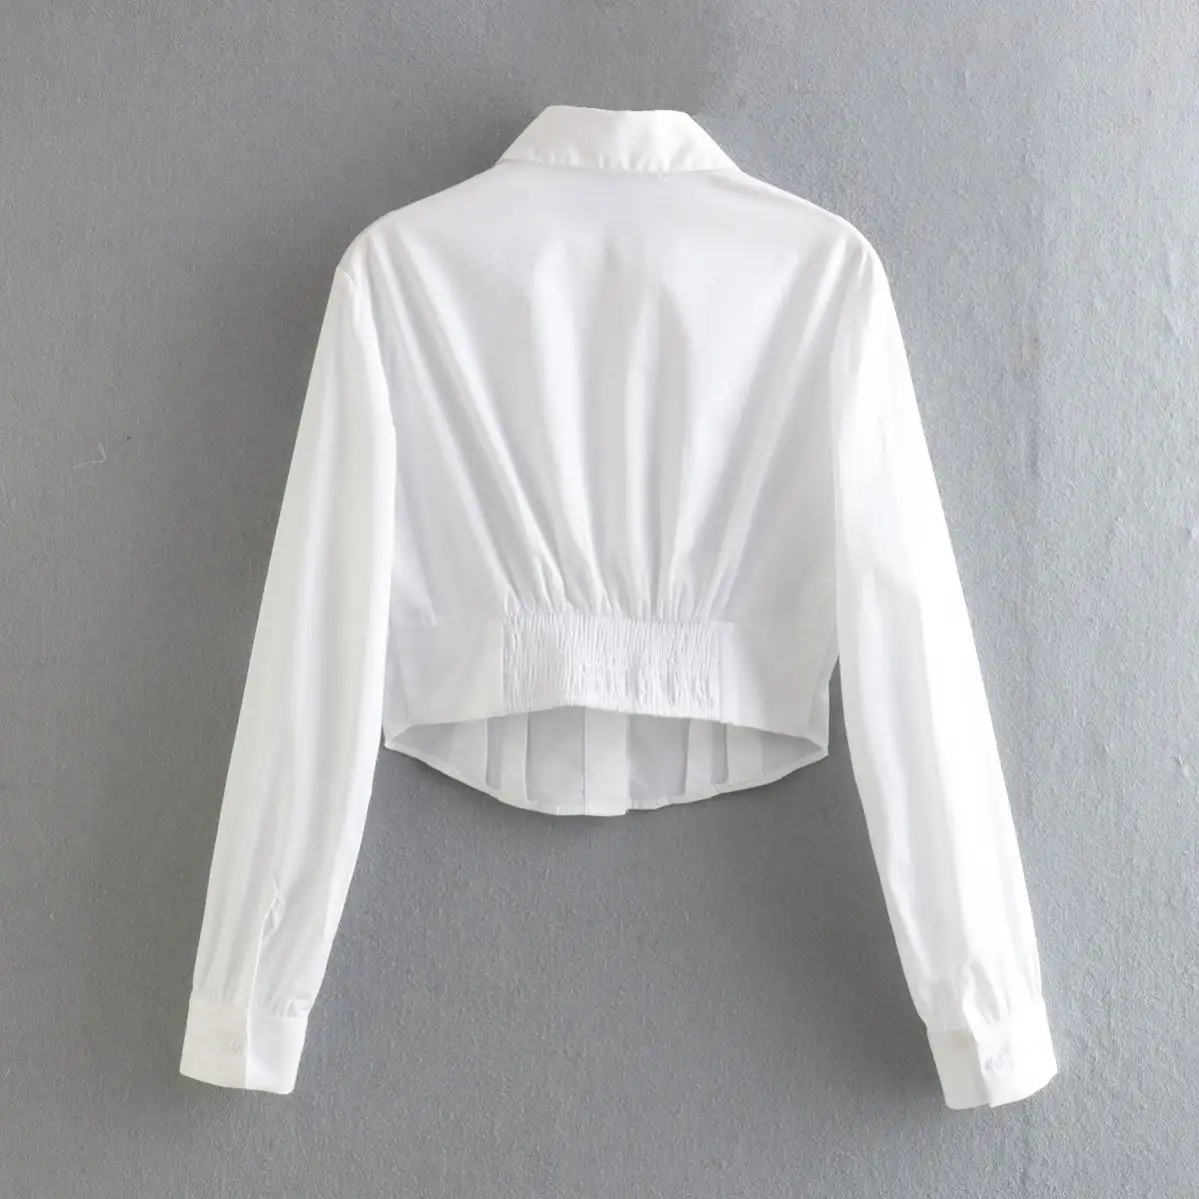 Blusa de manga larga estilo corsé para mujer, camisa femenina de color blanco liso, estilo clásico, a la moda, w105